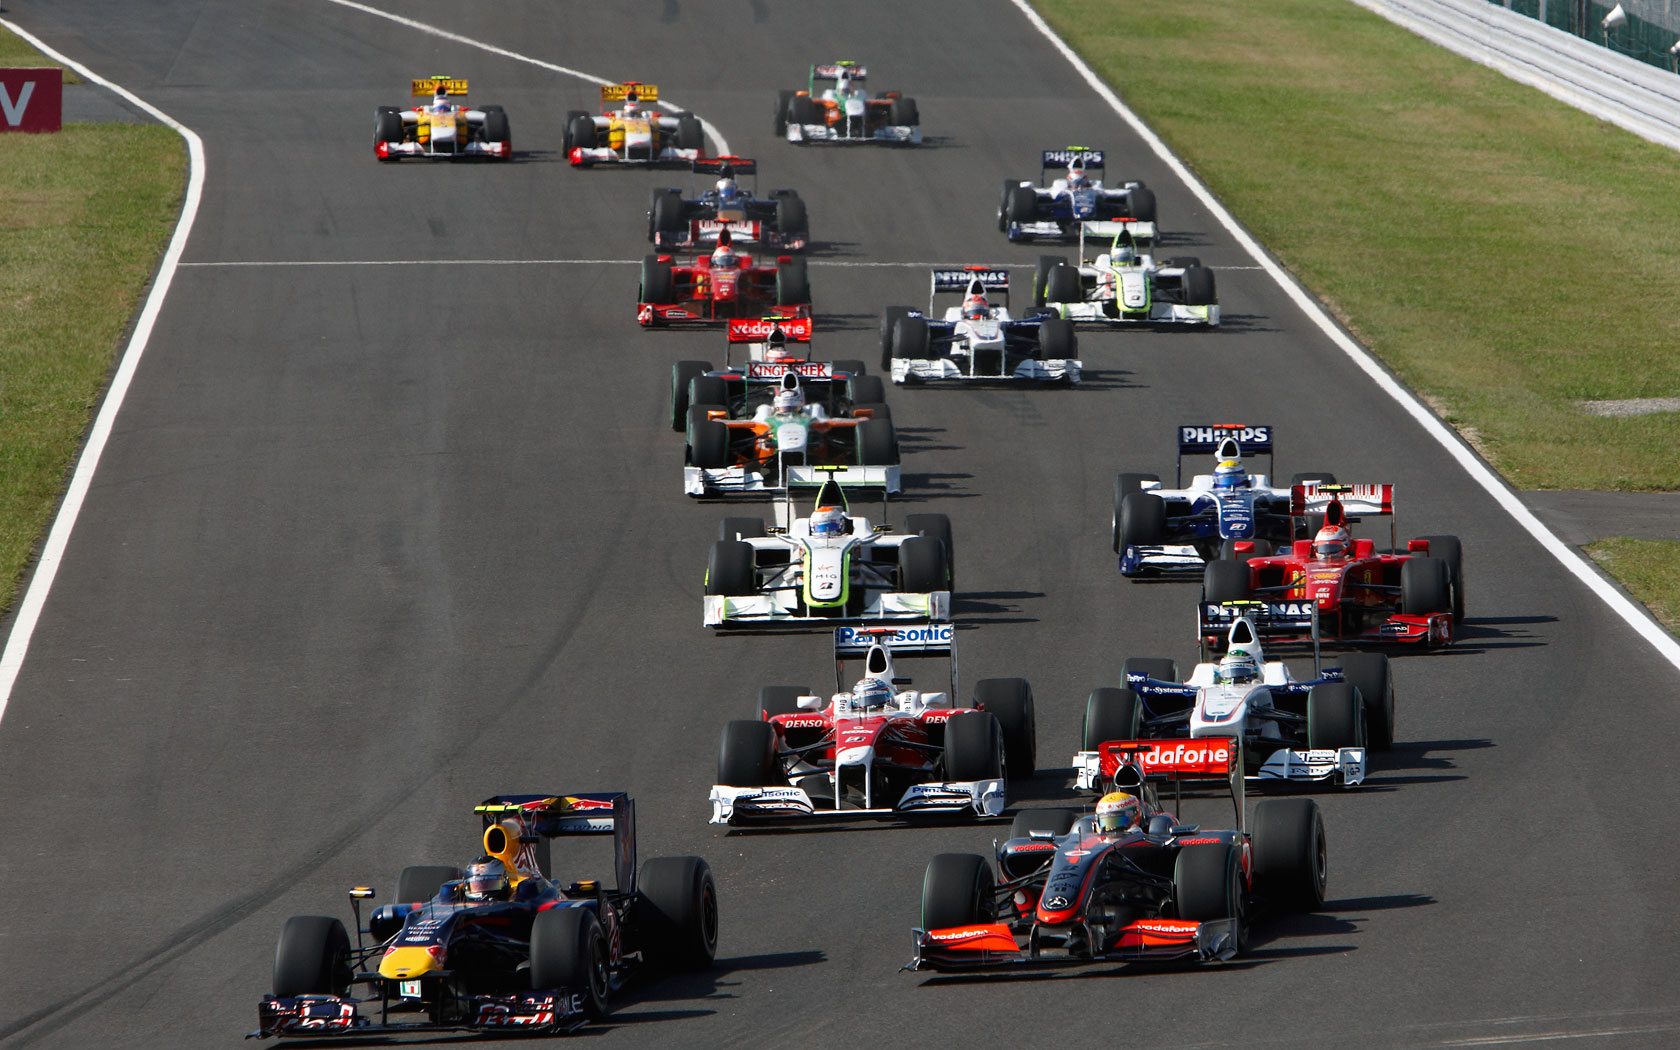 HD Wallpapers 2009 Formula 1 Grand Prix of Japan | F1-Fansite.com